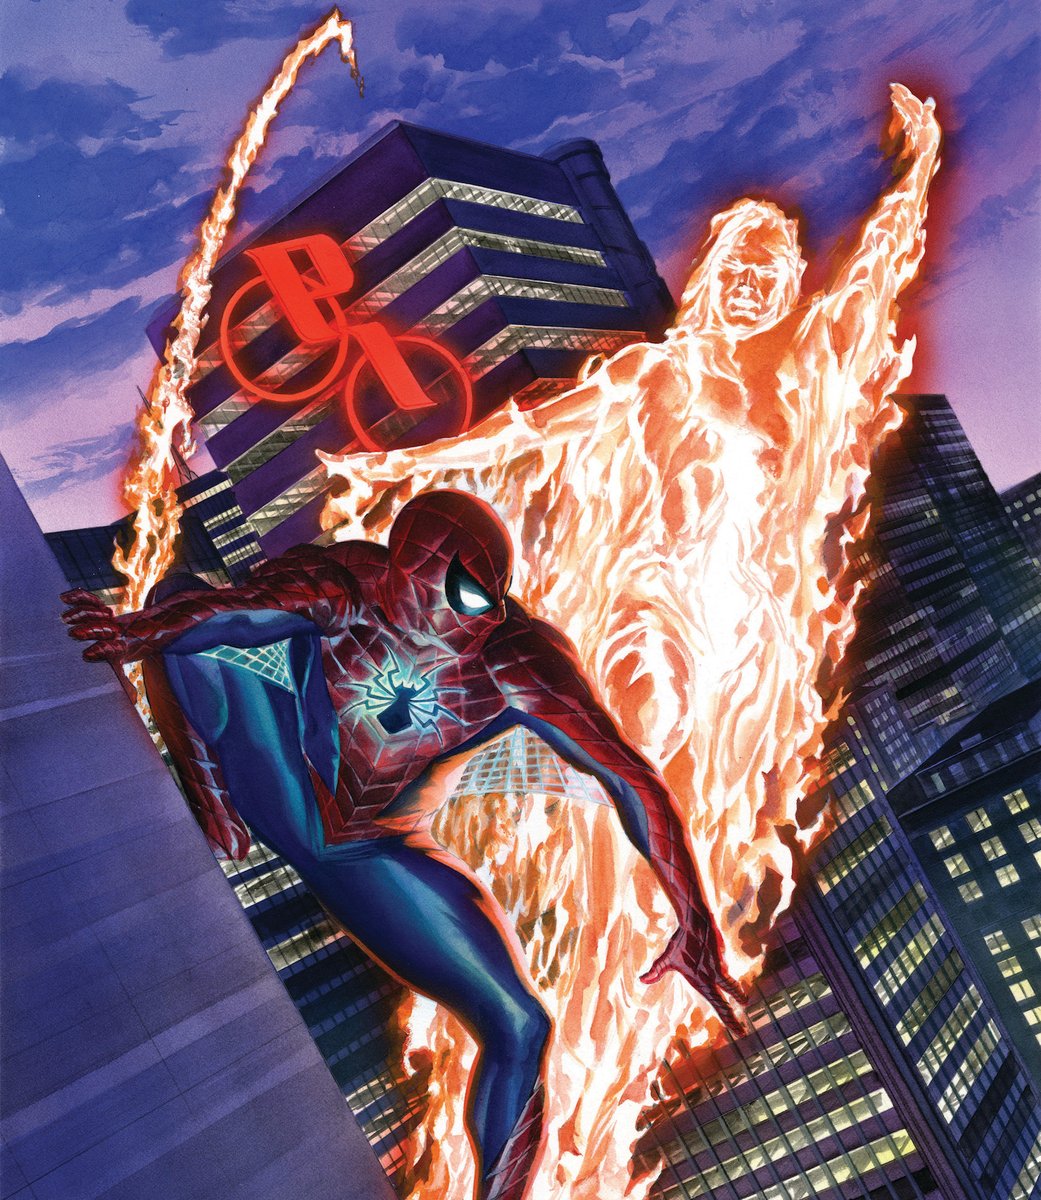 RT @thealexrossart: Amazing Spider-Man #3  #spiderman #humantorch #marvelcomics https://t.co/4UGZBYkOPI